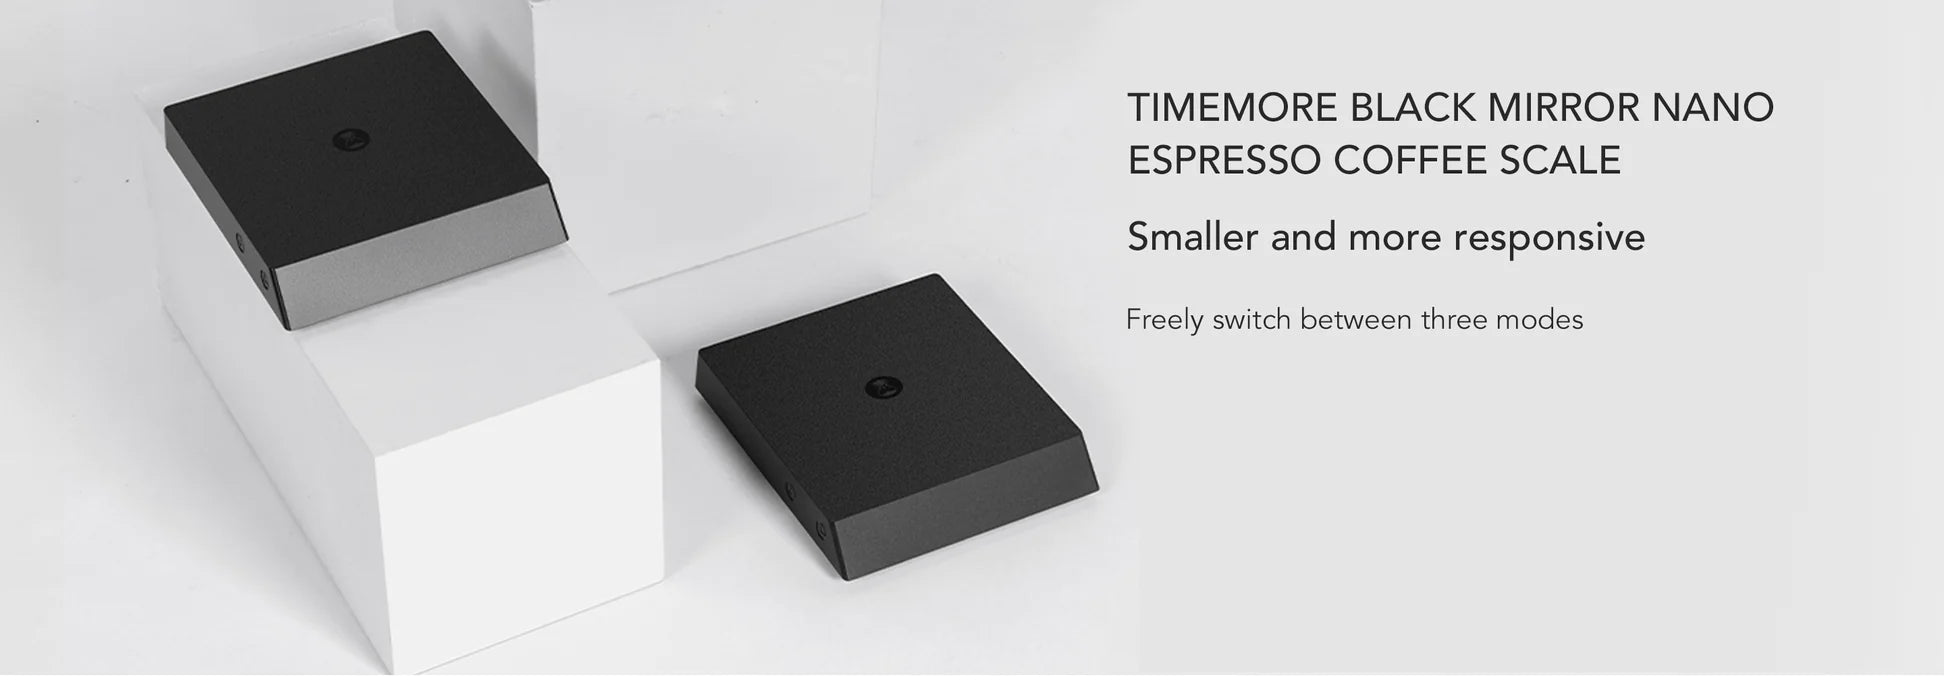 Timemore - Black Mirror Nano Coffee weighting scale Black |